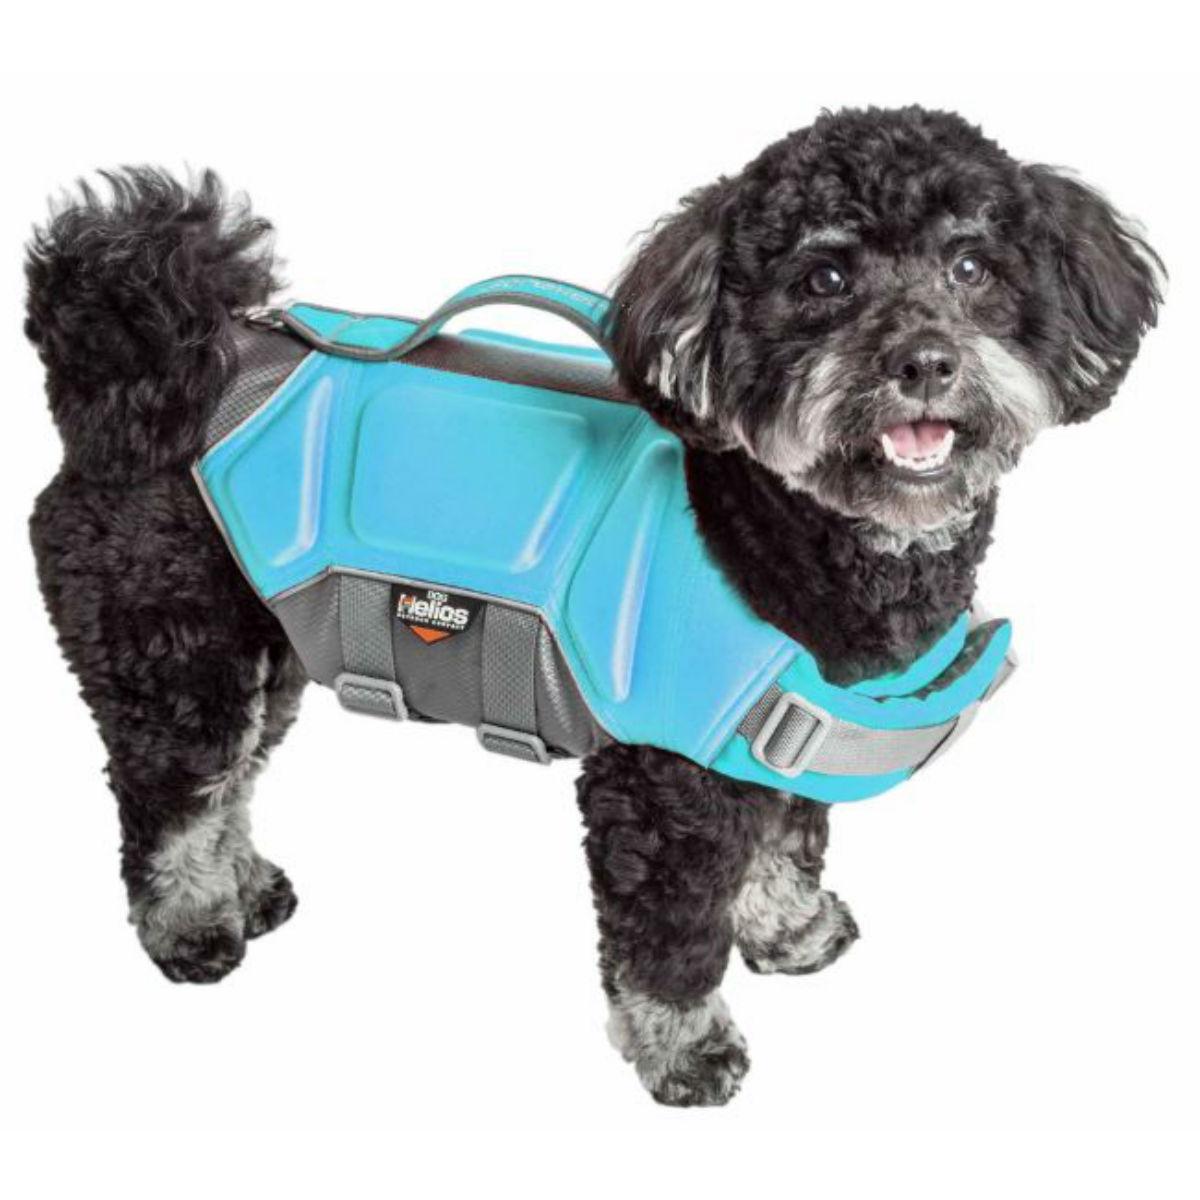 Pet Life Helios Tidal Guard Dog Life Jacket Vest - Light Blue